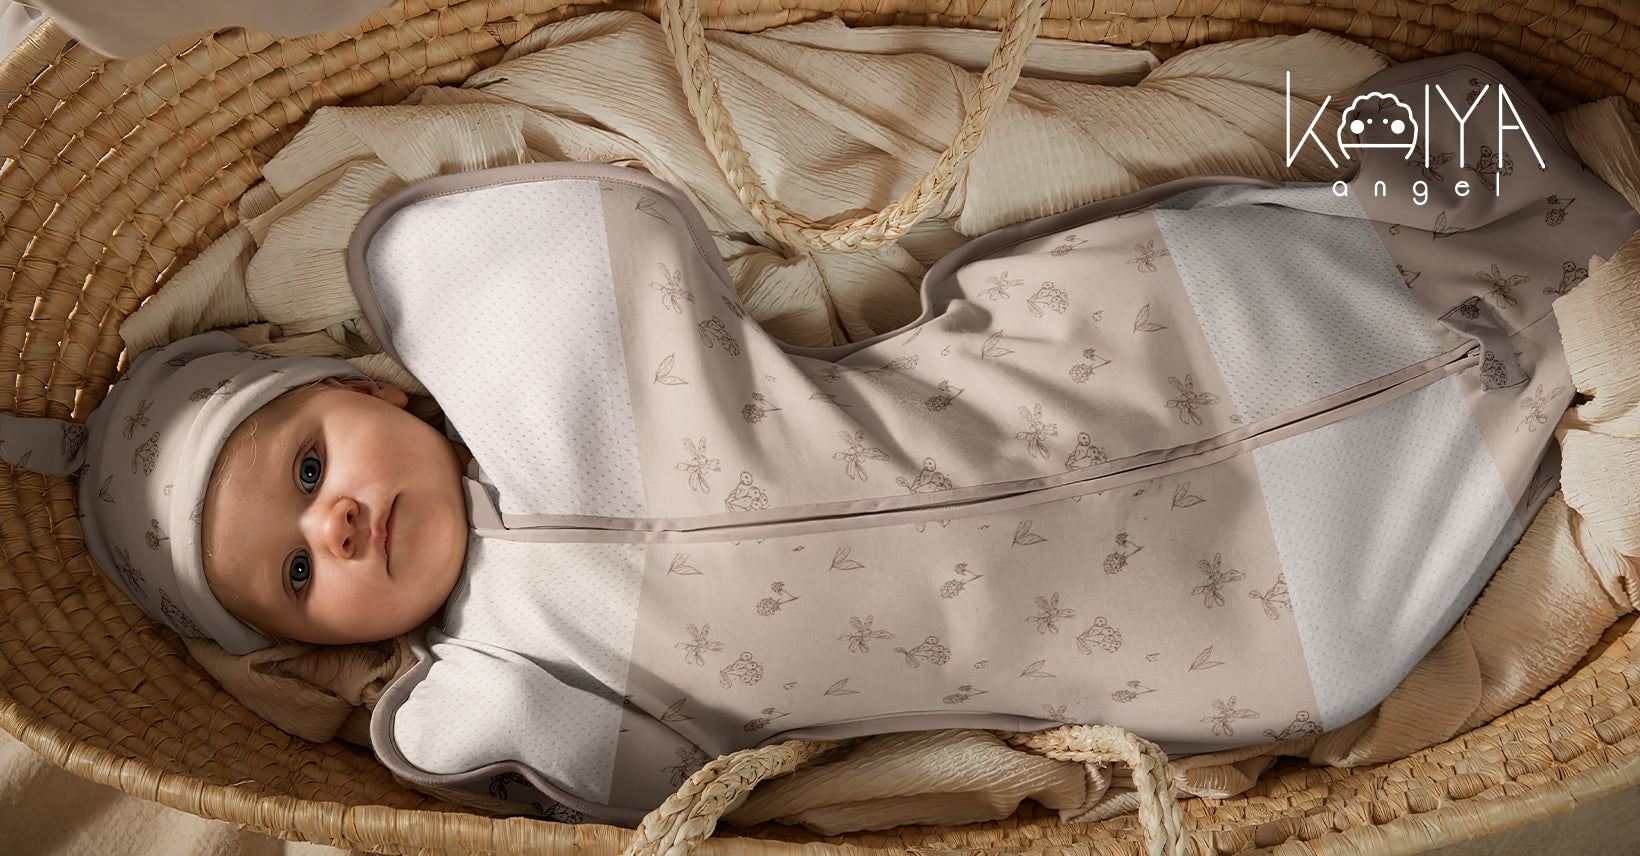 How to help newborn sleep at night?